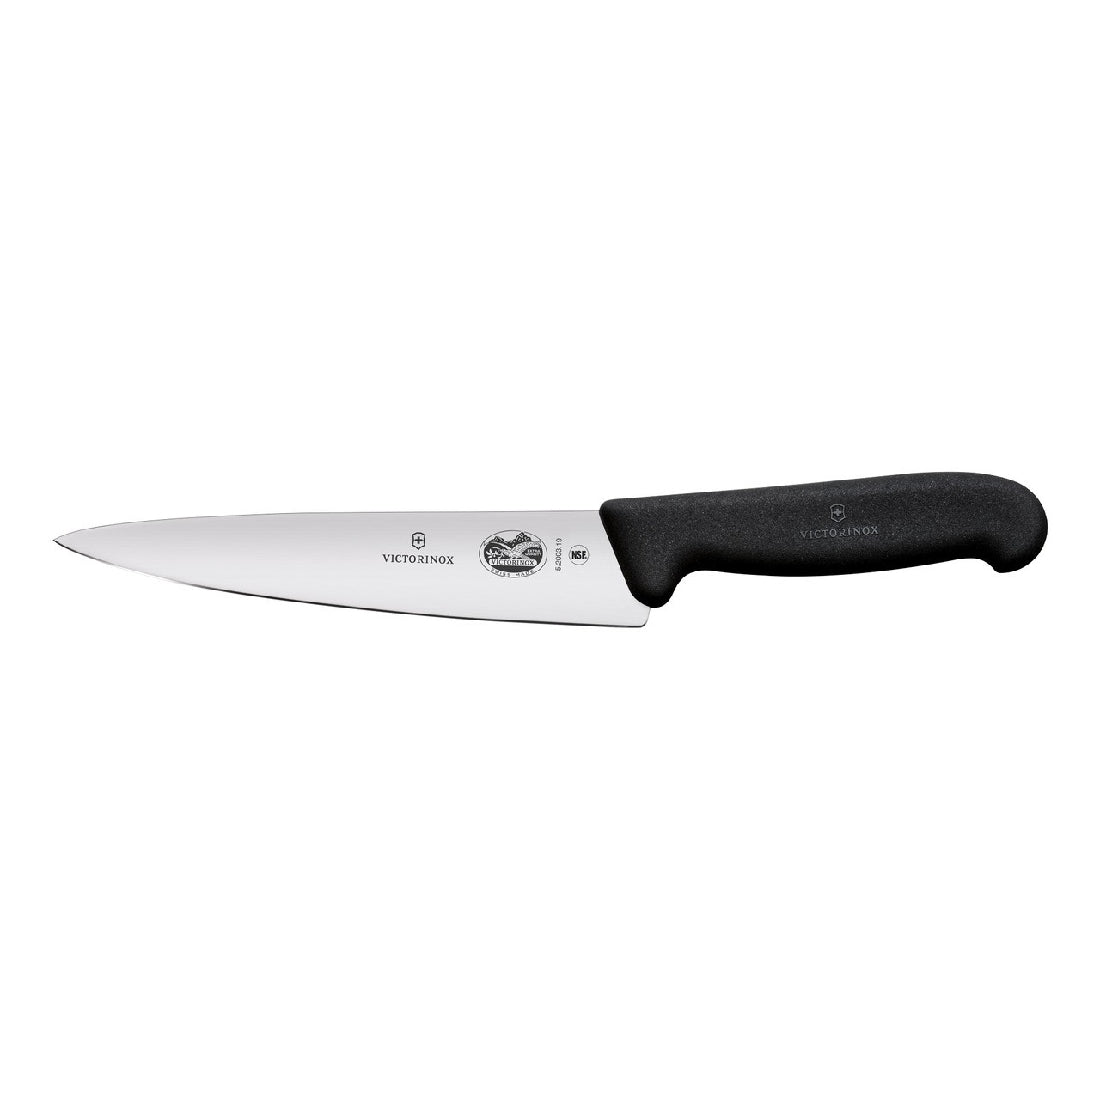 Victorinox 19cm Carving Knife - Broad Blade